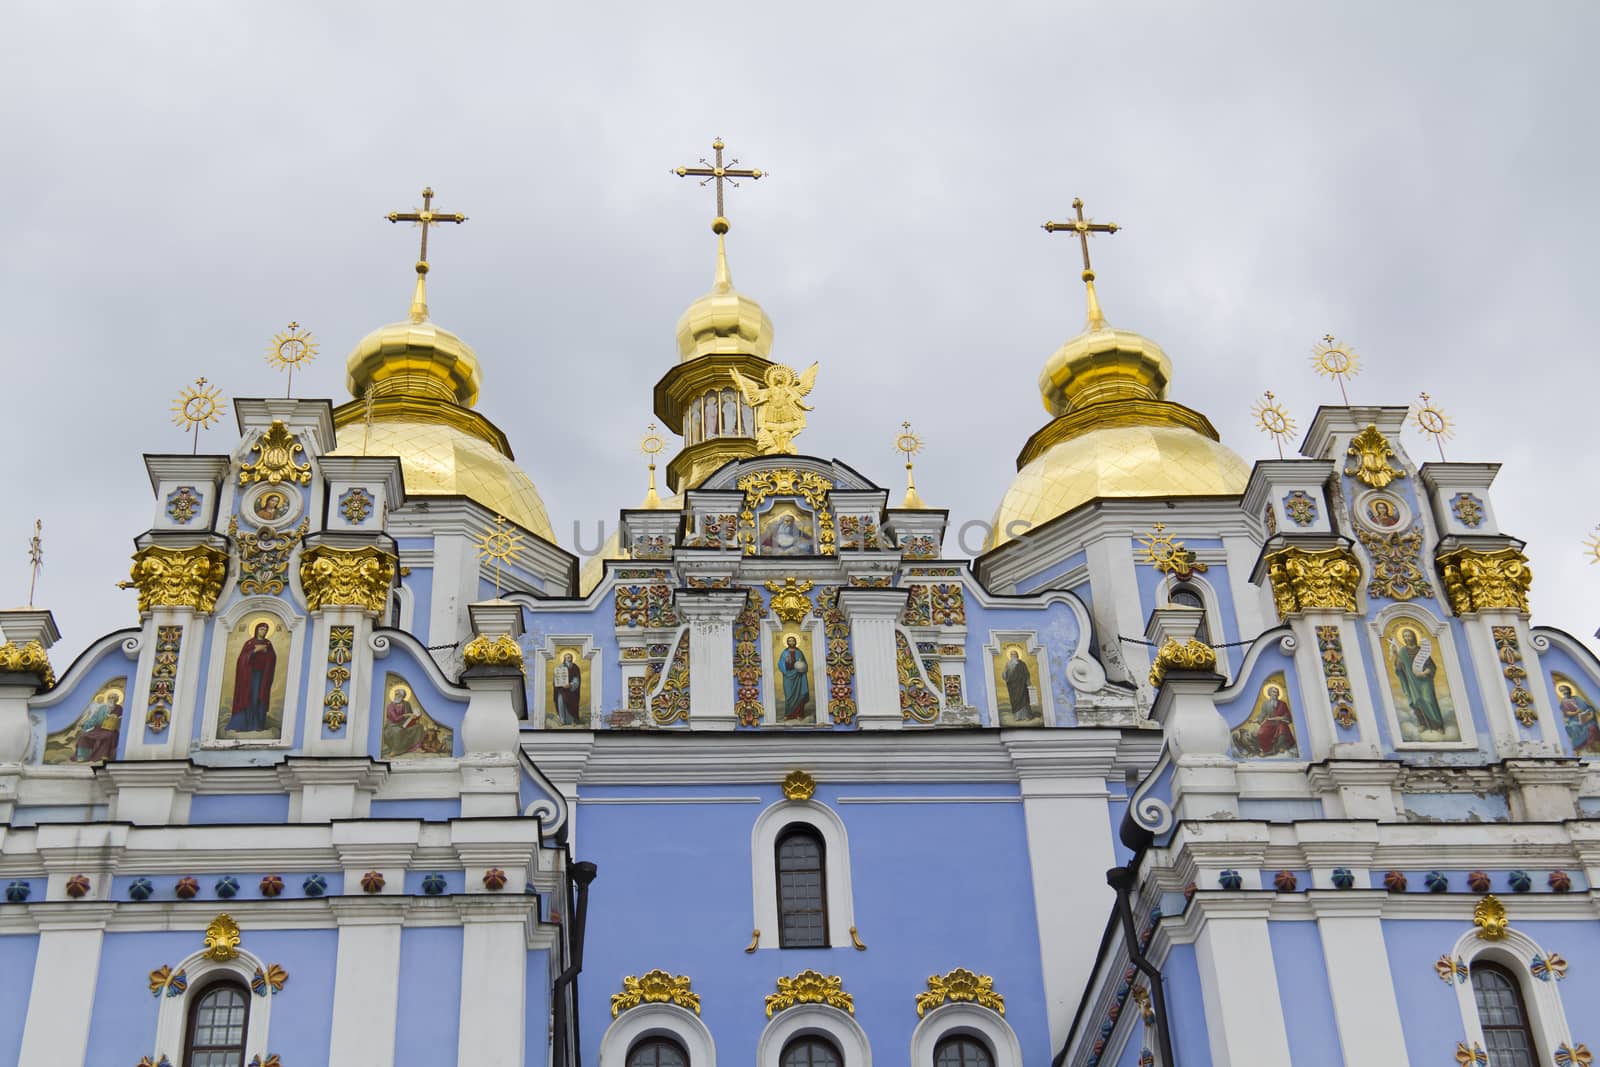 St. Michael cathedral / monastery in Kiev, Ukraine